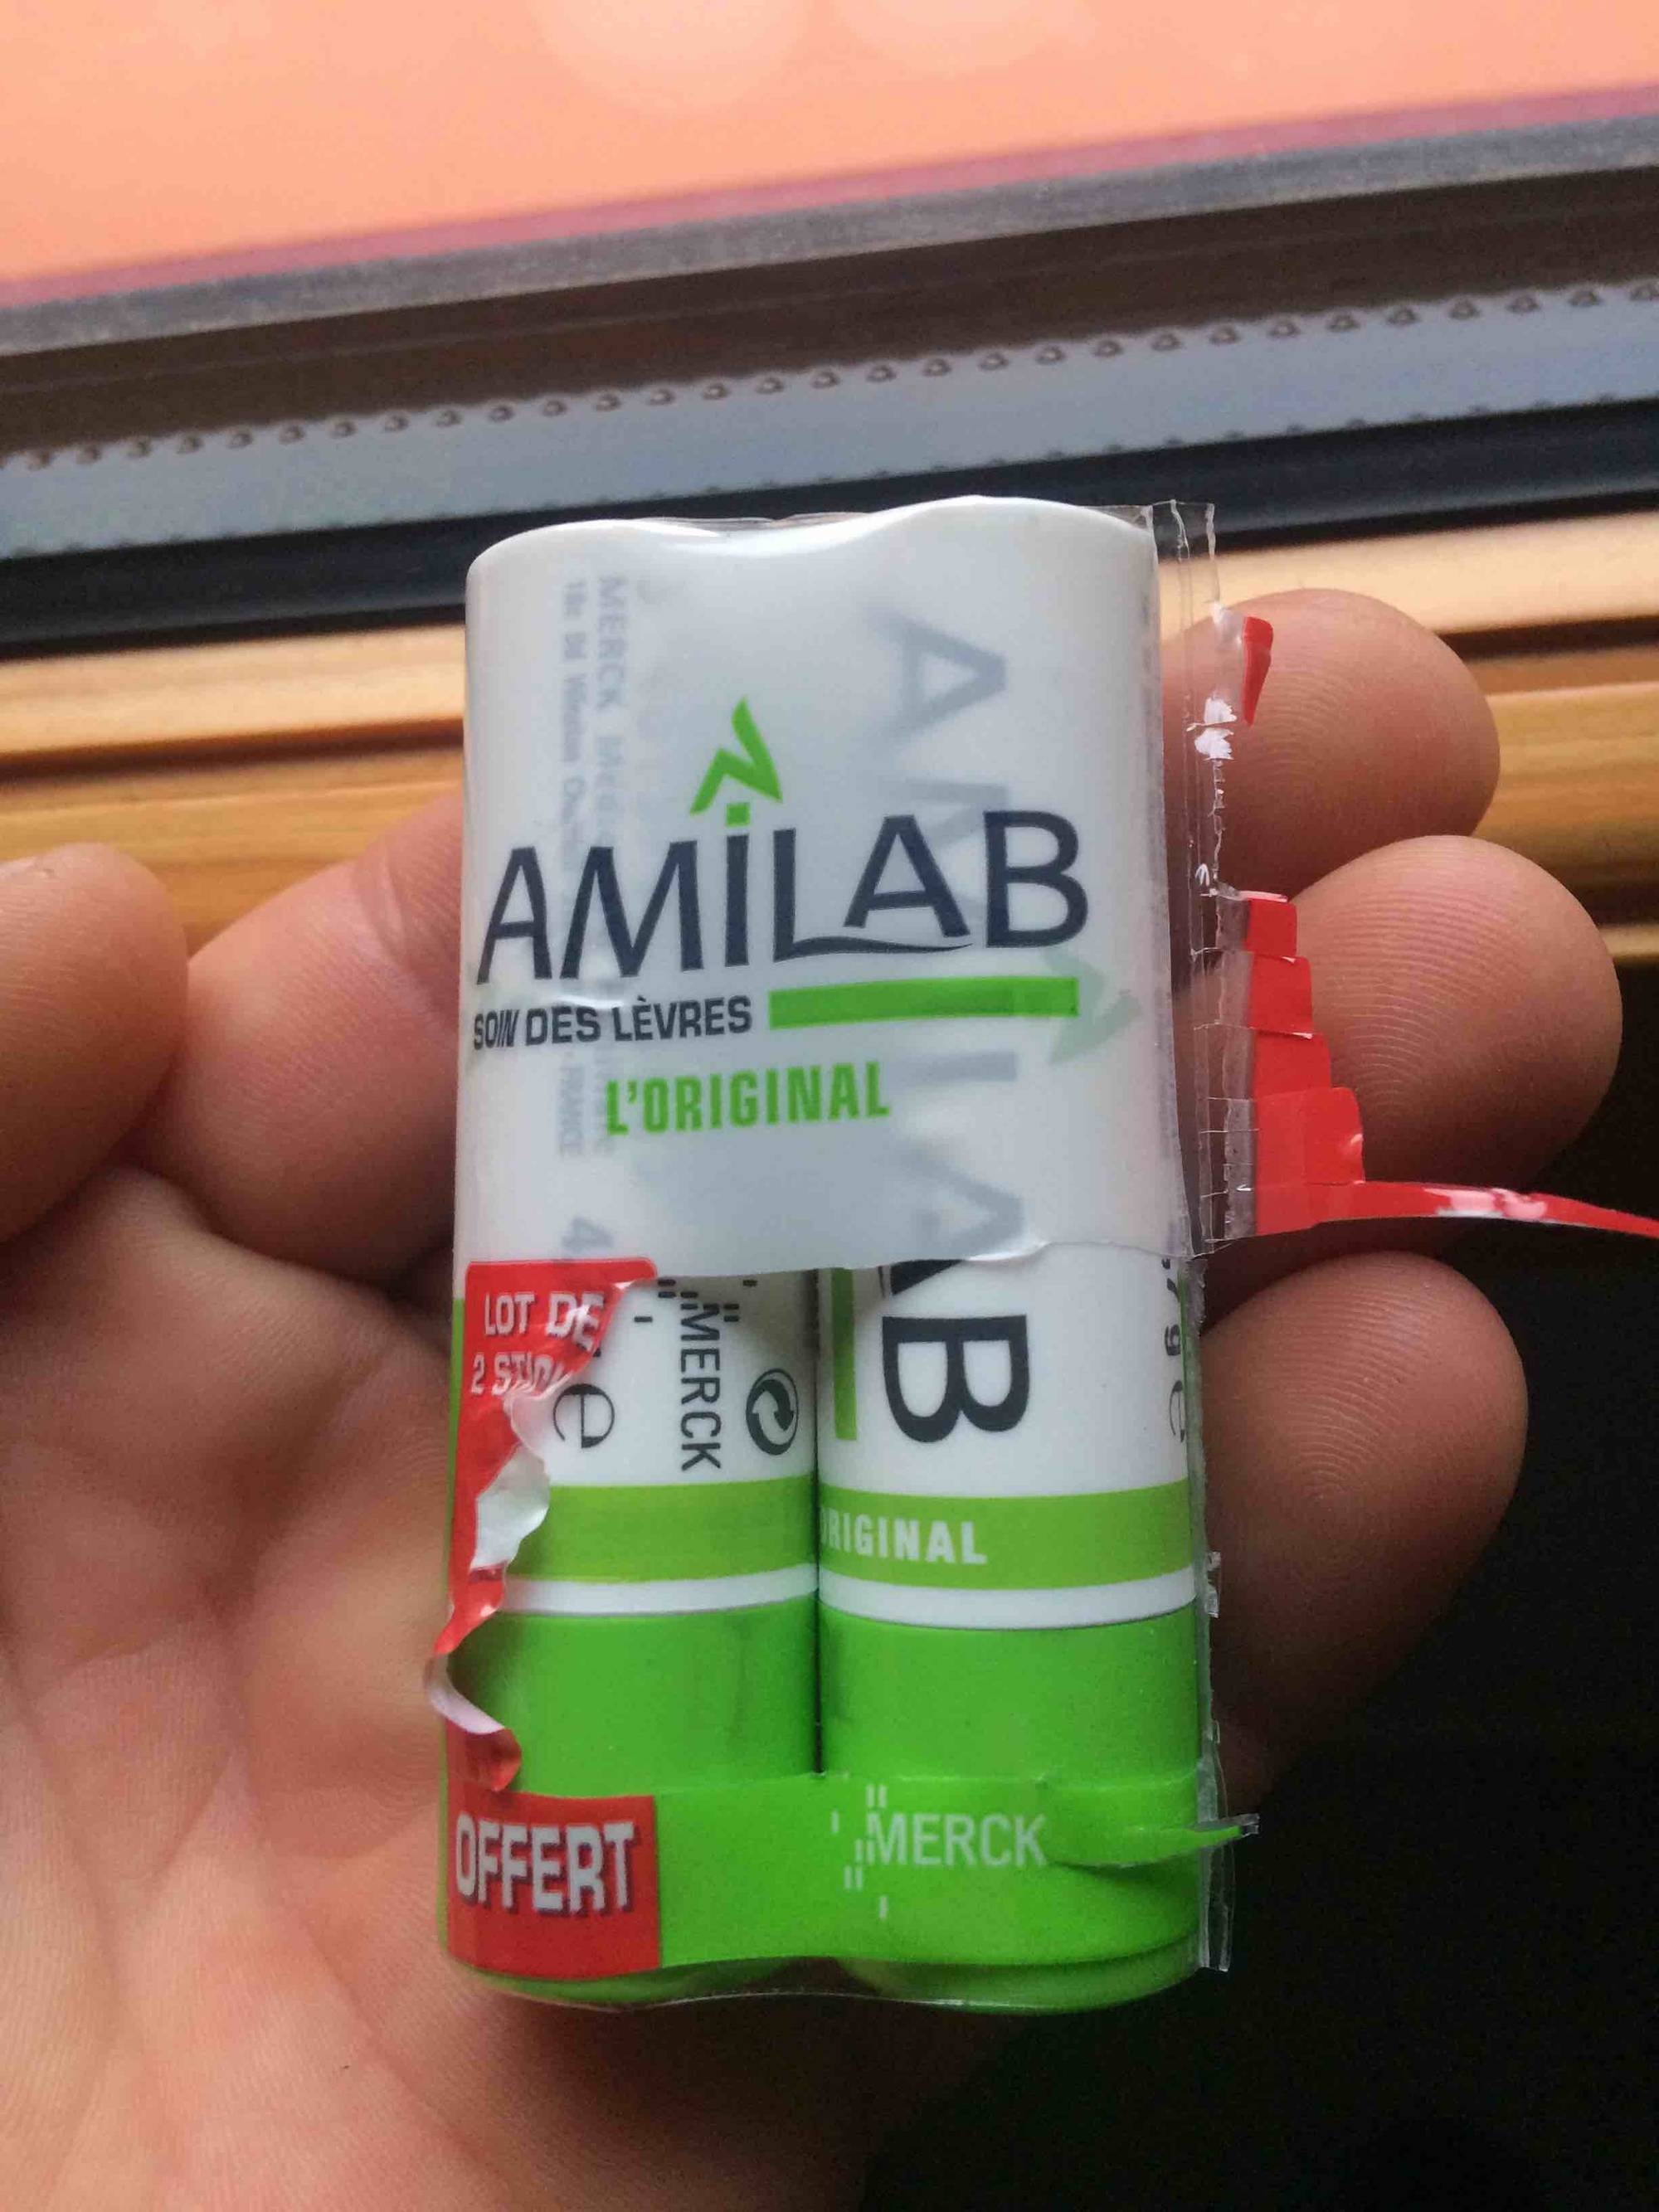 AMILAB - L'original lot de 2 sticks - Soin des lèvres